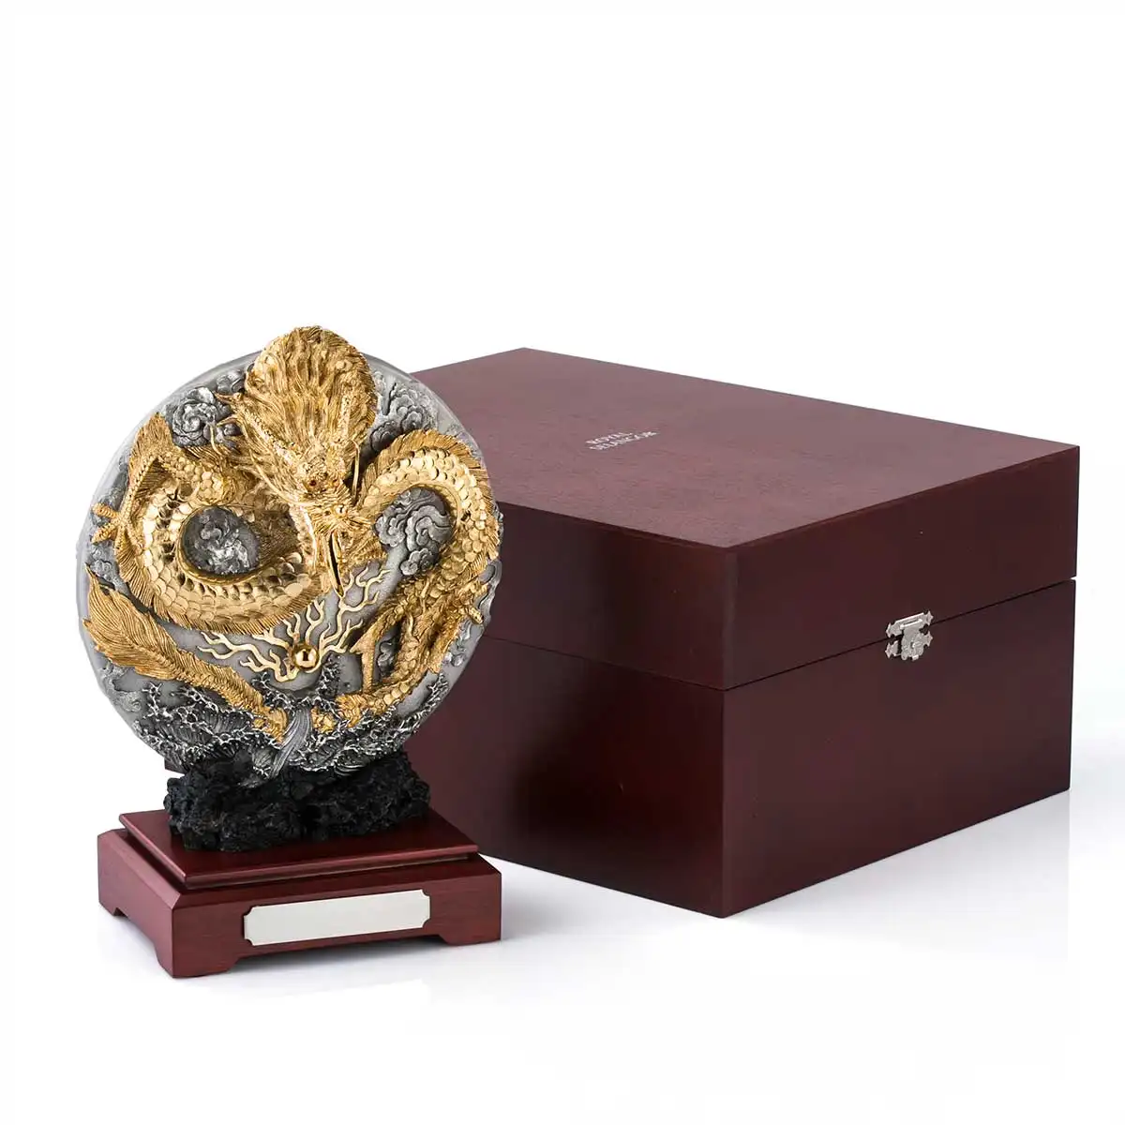 celestial-dragon-figurine-in-wooden-gift-box-6